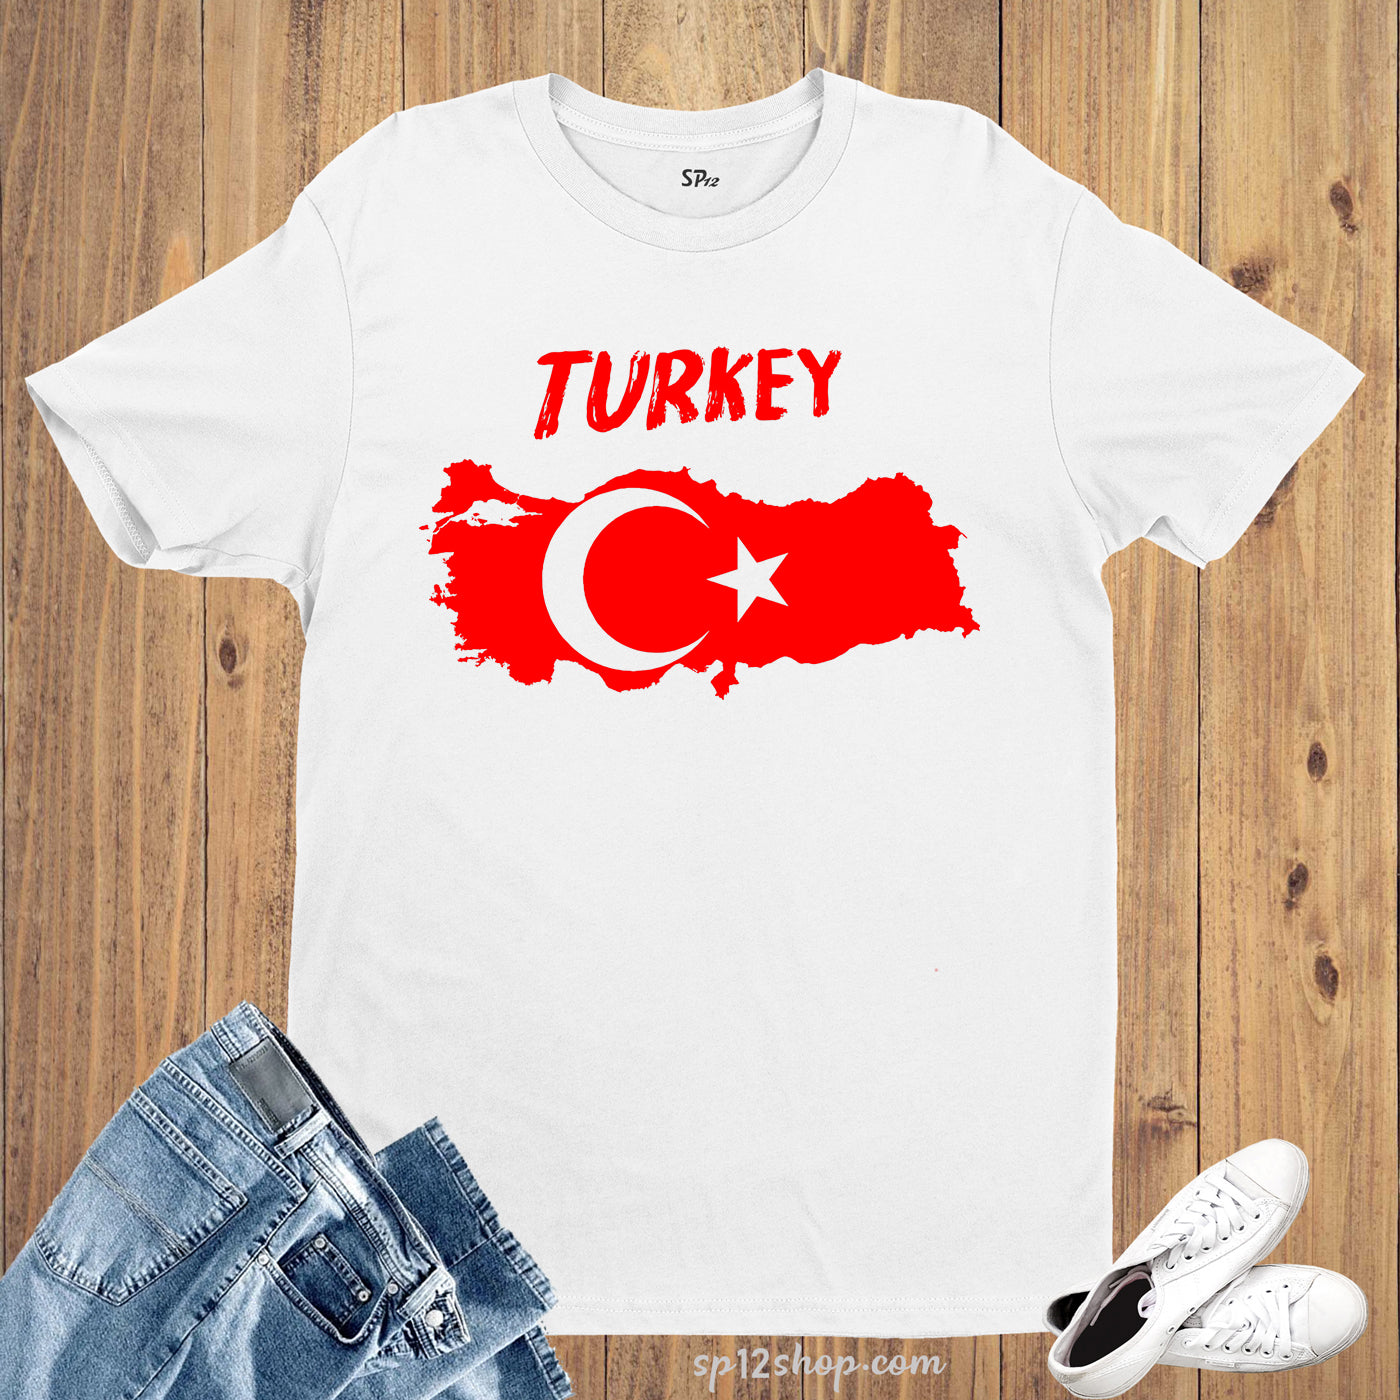 Turkey Flag T Shirt Olympics FIFA World Cup Country Flag Tee Shirt